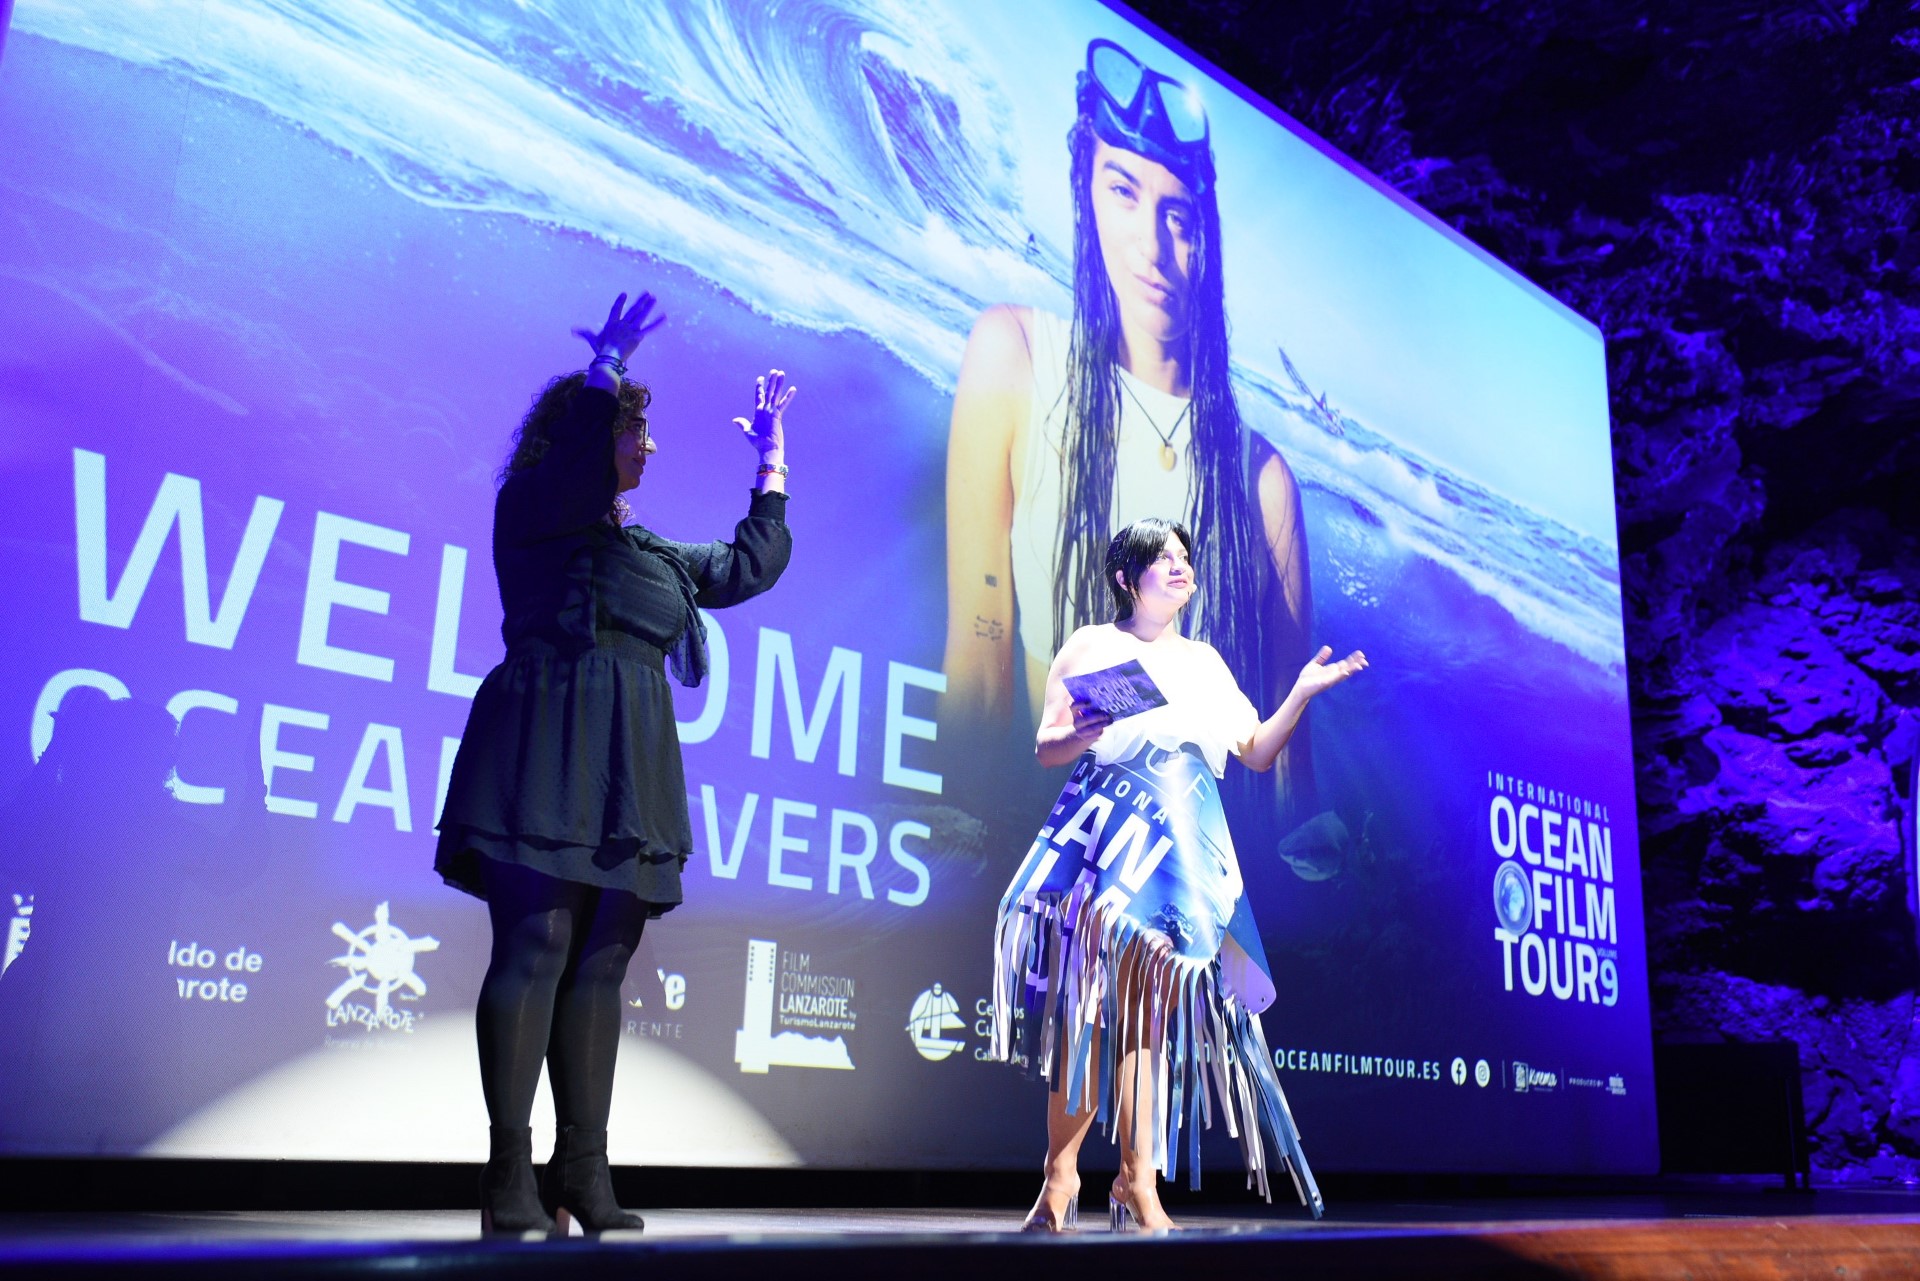 International Ocean Film Tour / CanariasNoticias.es 